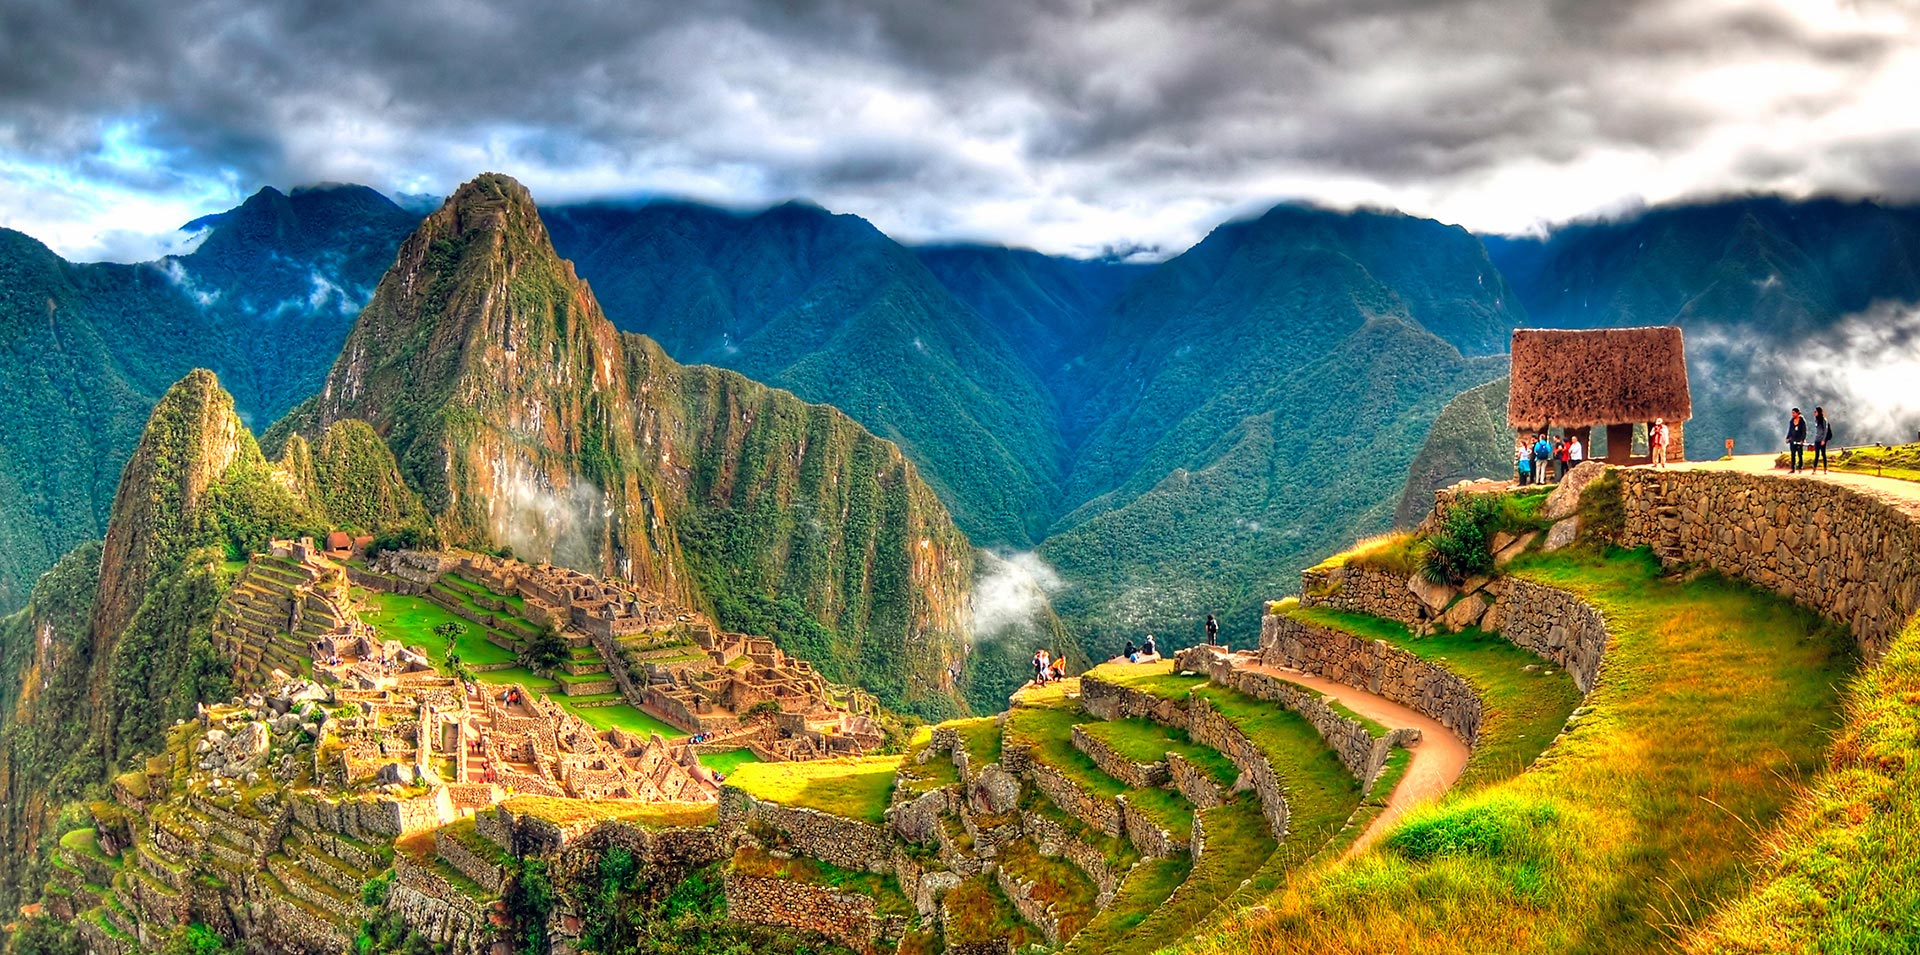 Travel to Peru's Machu Picchu with a UK Visa